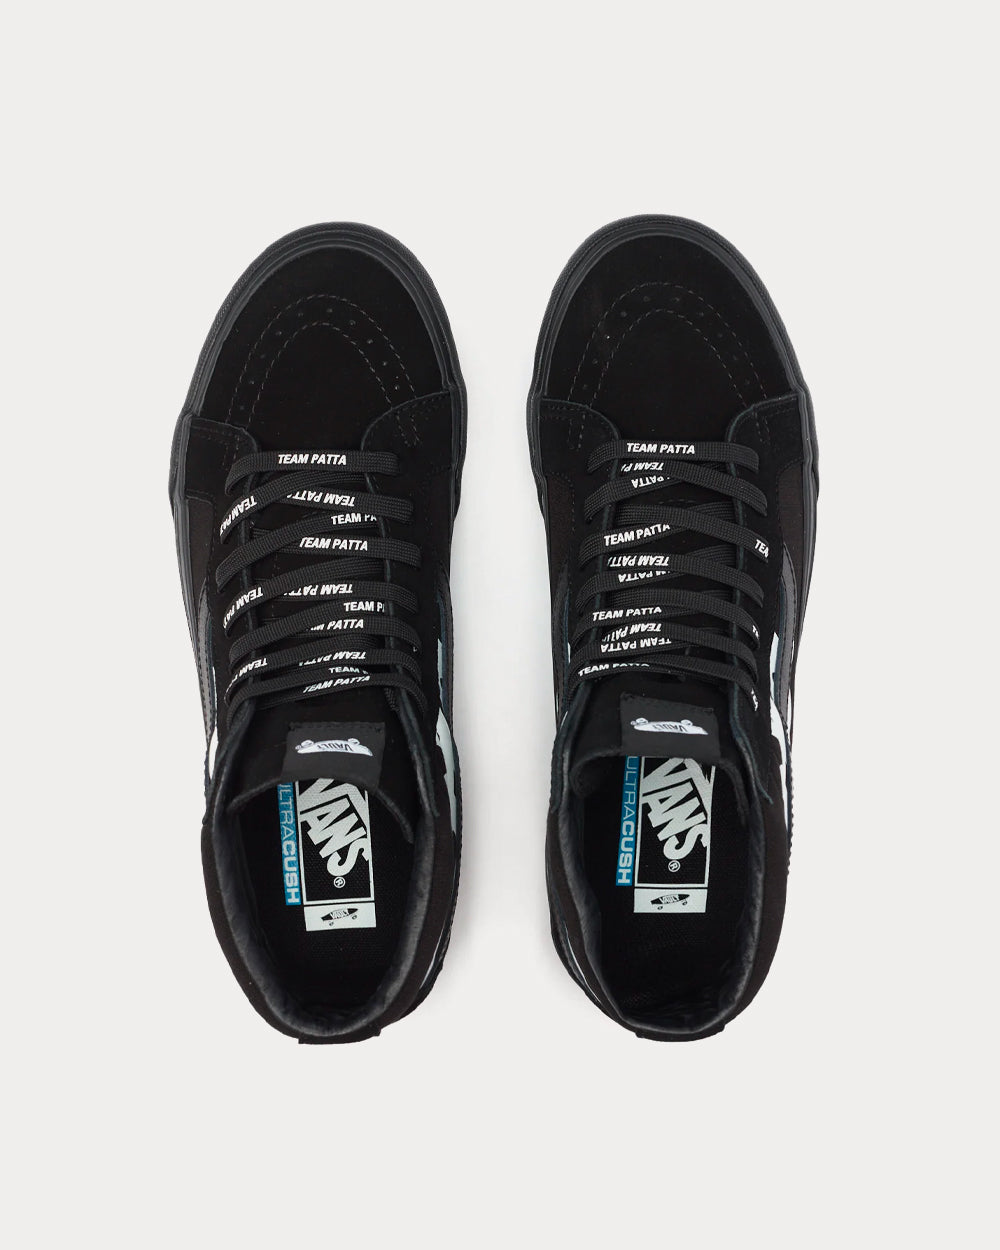 Vans x Patta - SK8-Hi Reissue VLT LX Black High Top Sneakers